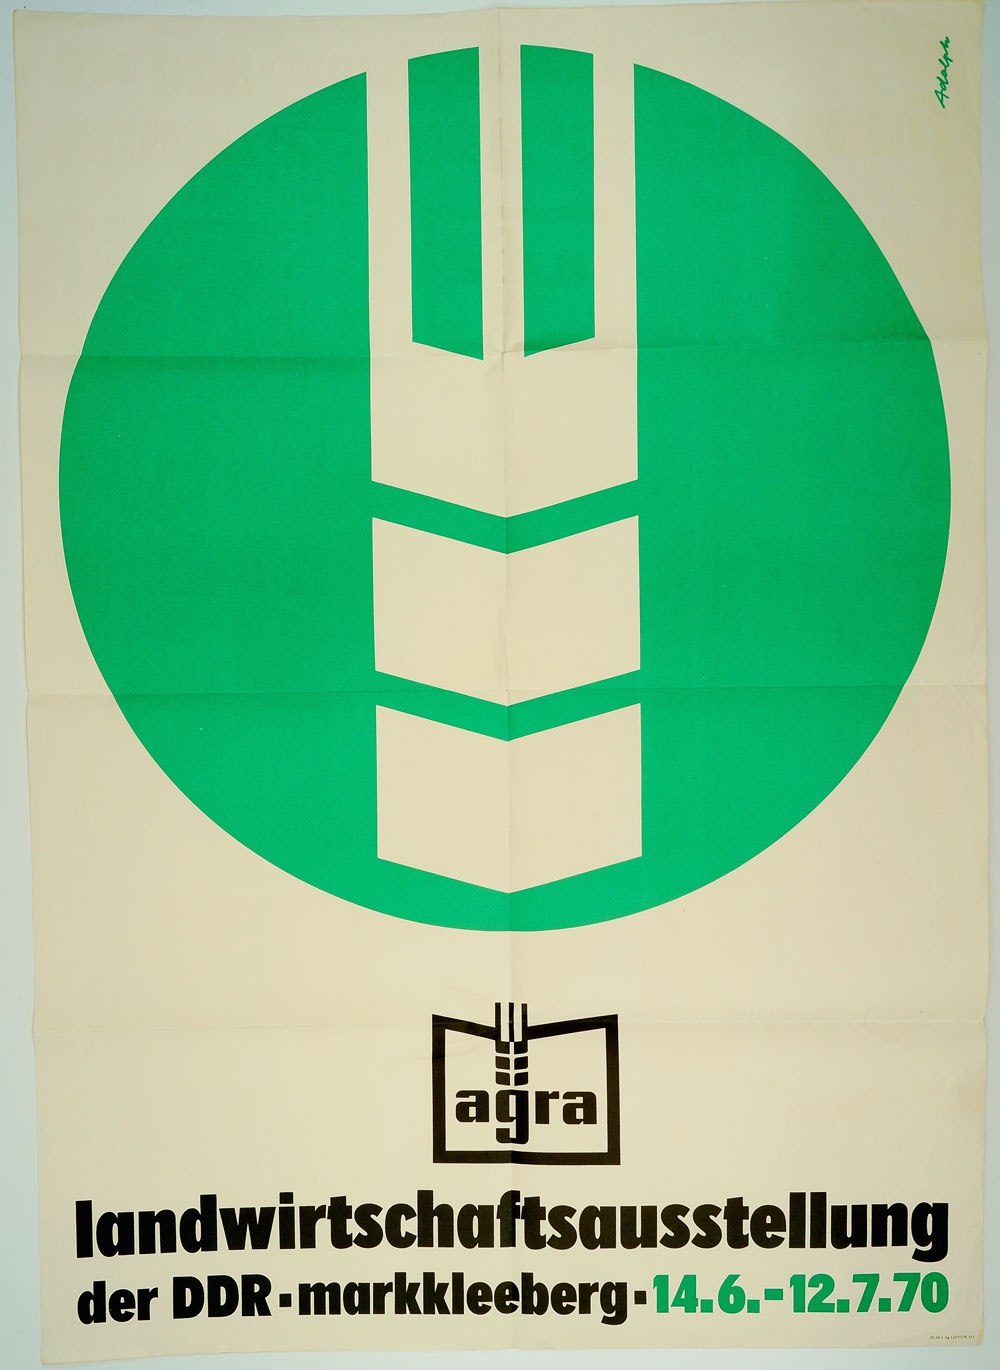 Plakat für die landwirtschaftsausstellung (agra) in Markkleeberg 1970 (Museum Weißenfels - Schloss Neu-Augustusburg CC BY-NC-SA)